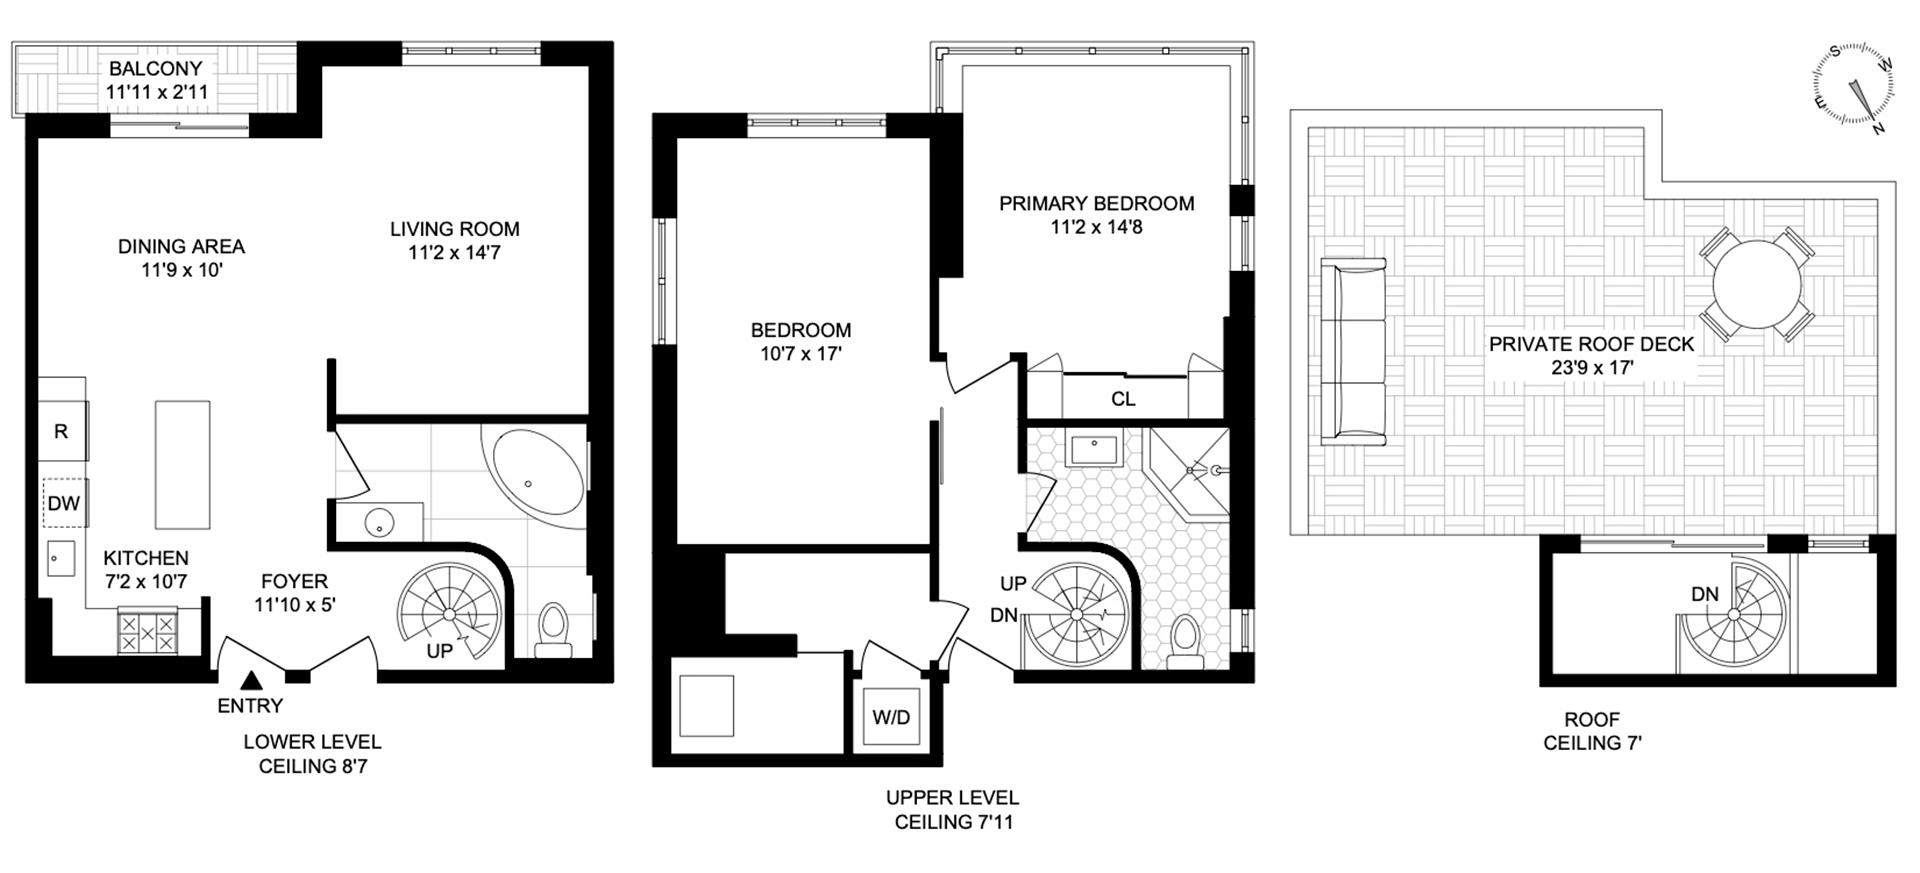 Floorplan for 392 14th Street, 4B